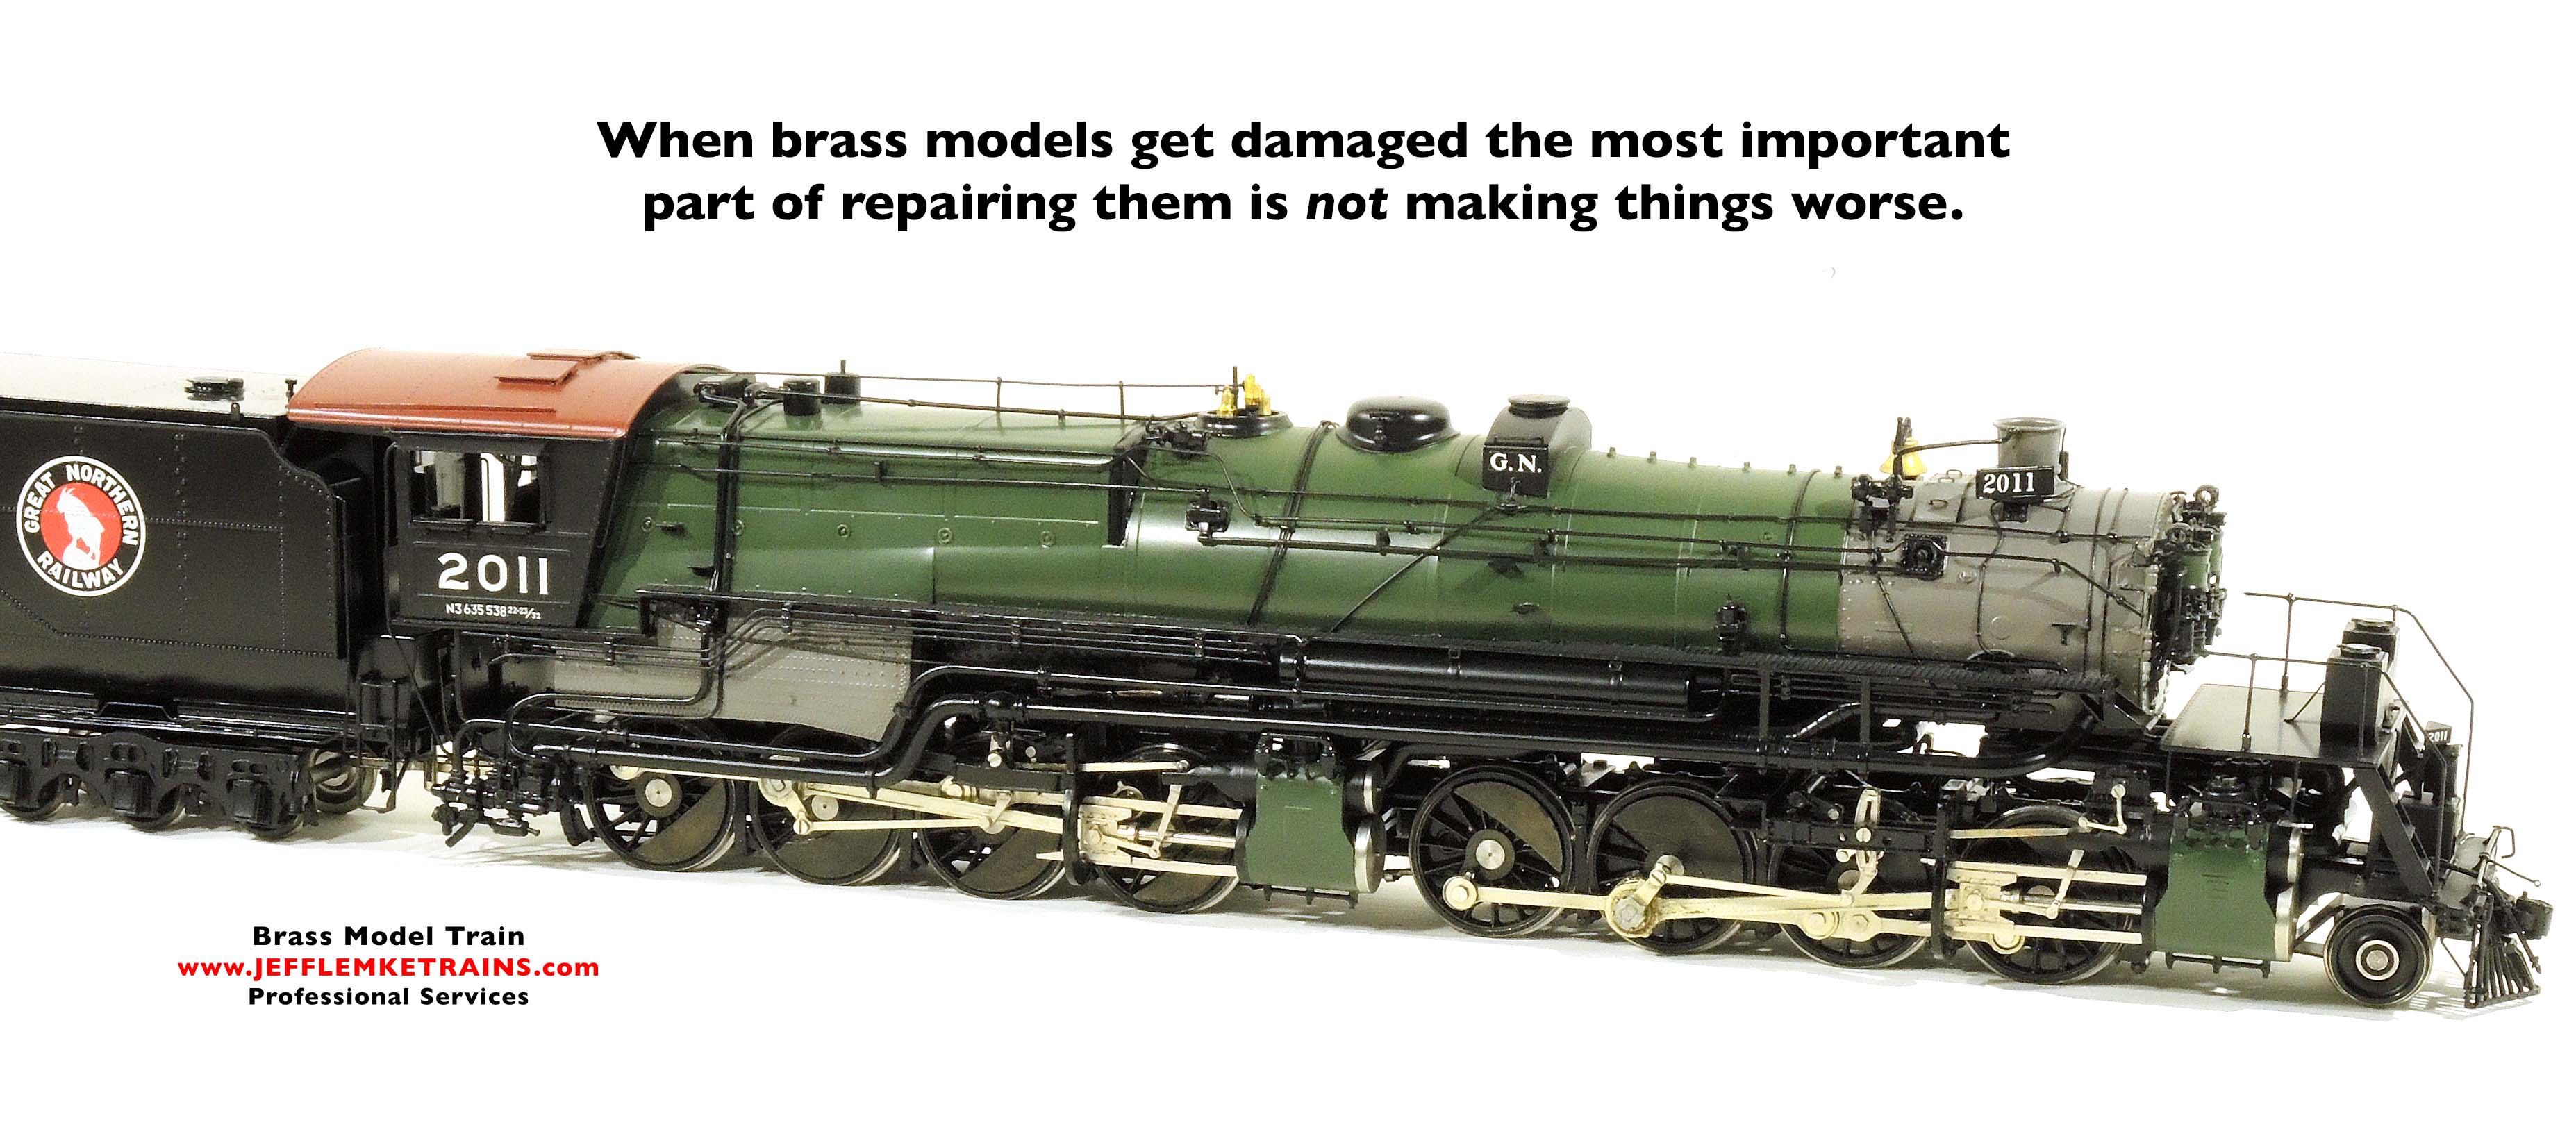 Brass Model Train Professional Repairs by Jeff Lemke Trains